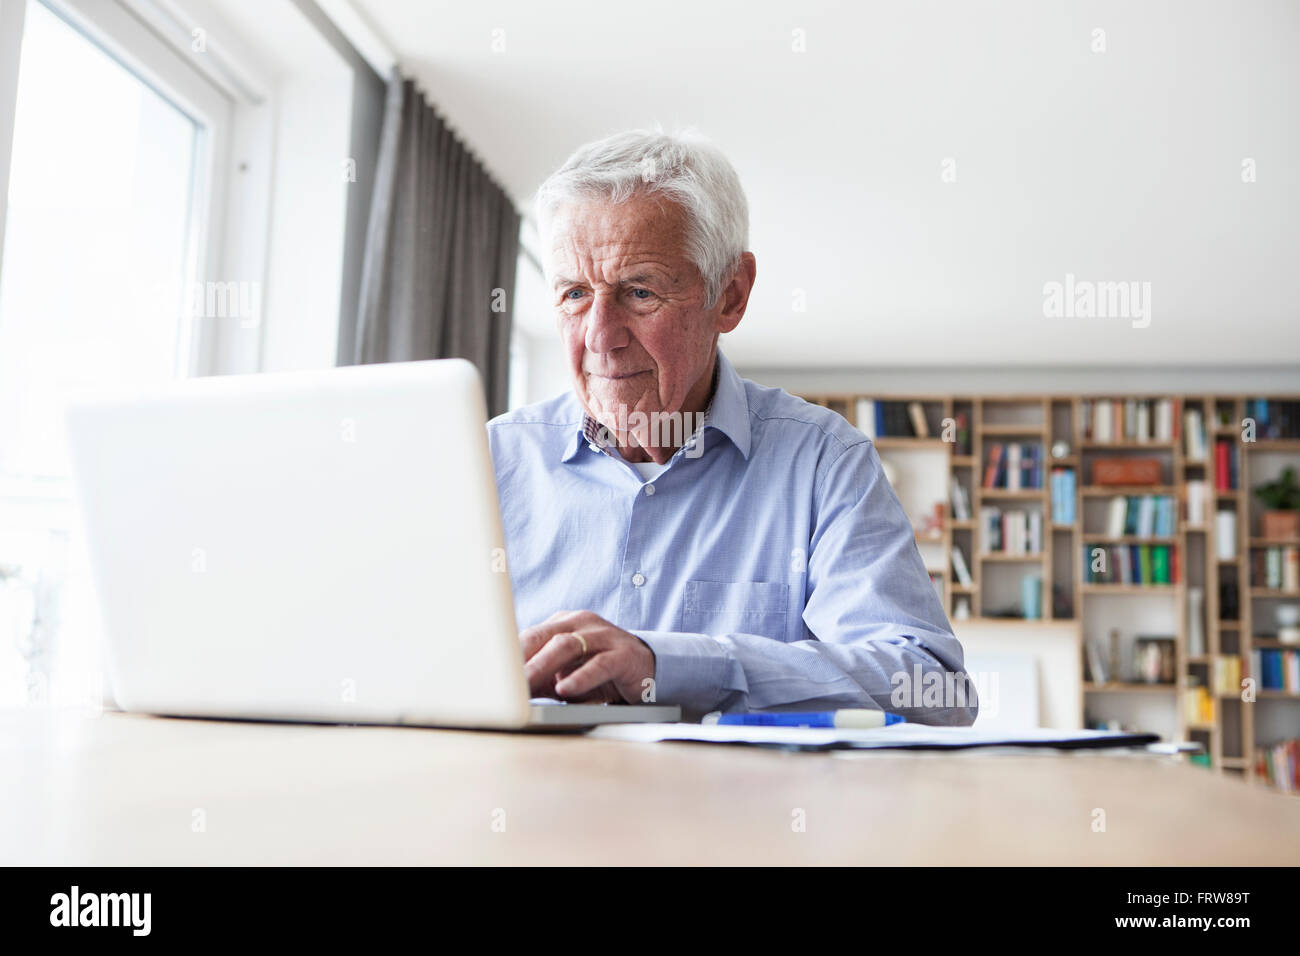 Portrait of senior man sitting at table using laptop Stock Photo